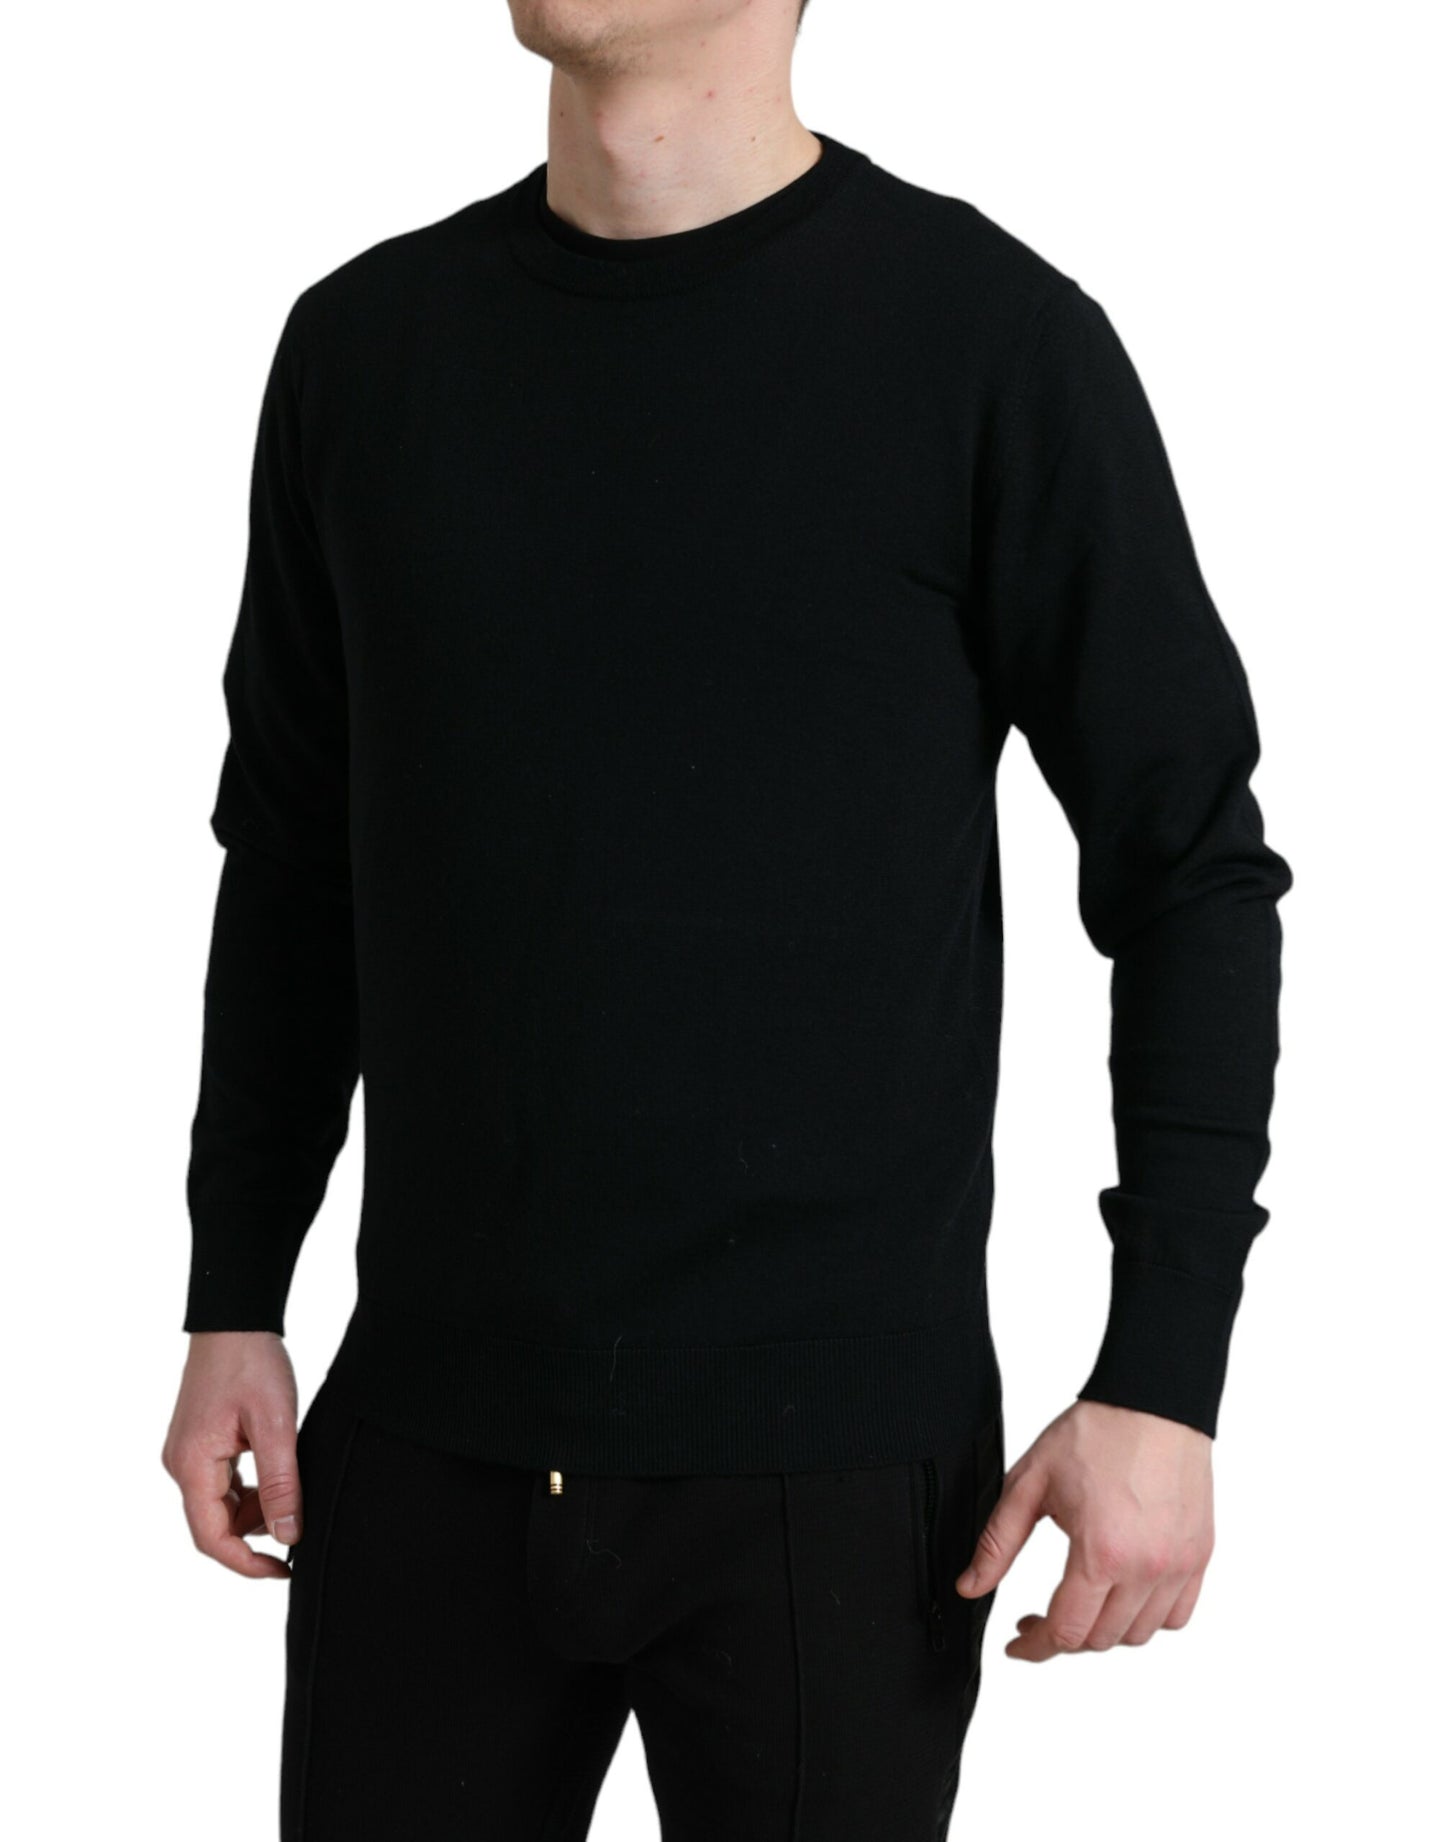 Stunning Black Wool Sweater